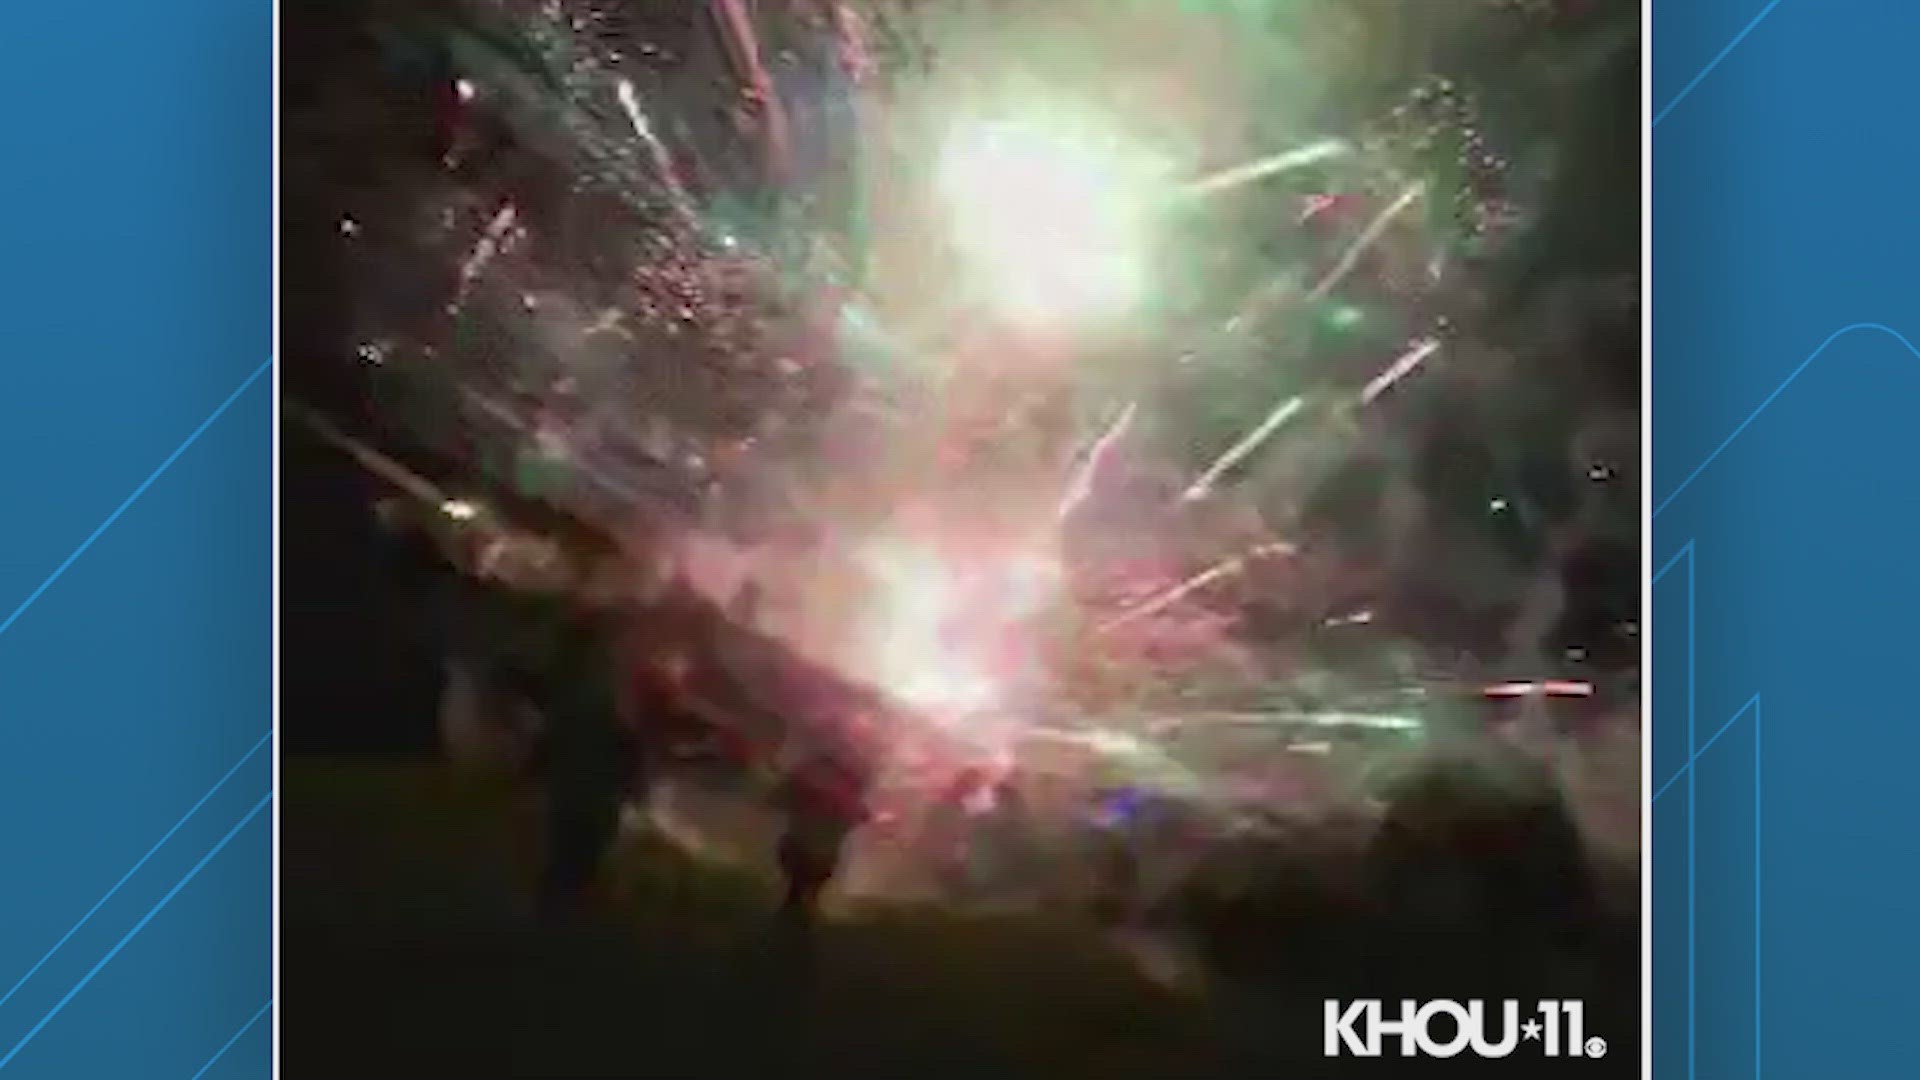 Lake Conroe fireworks show goes awry, injuring three people